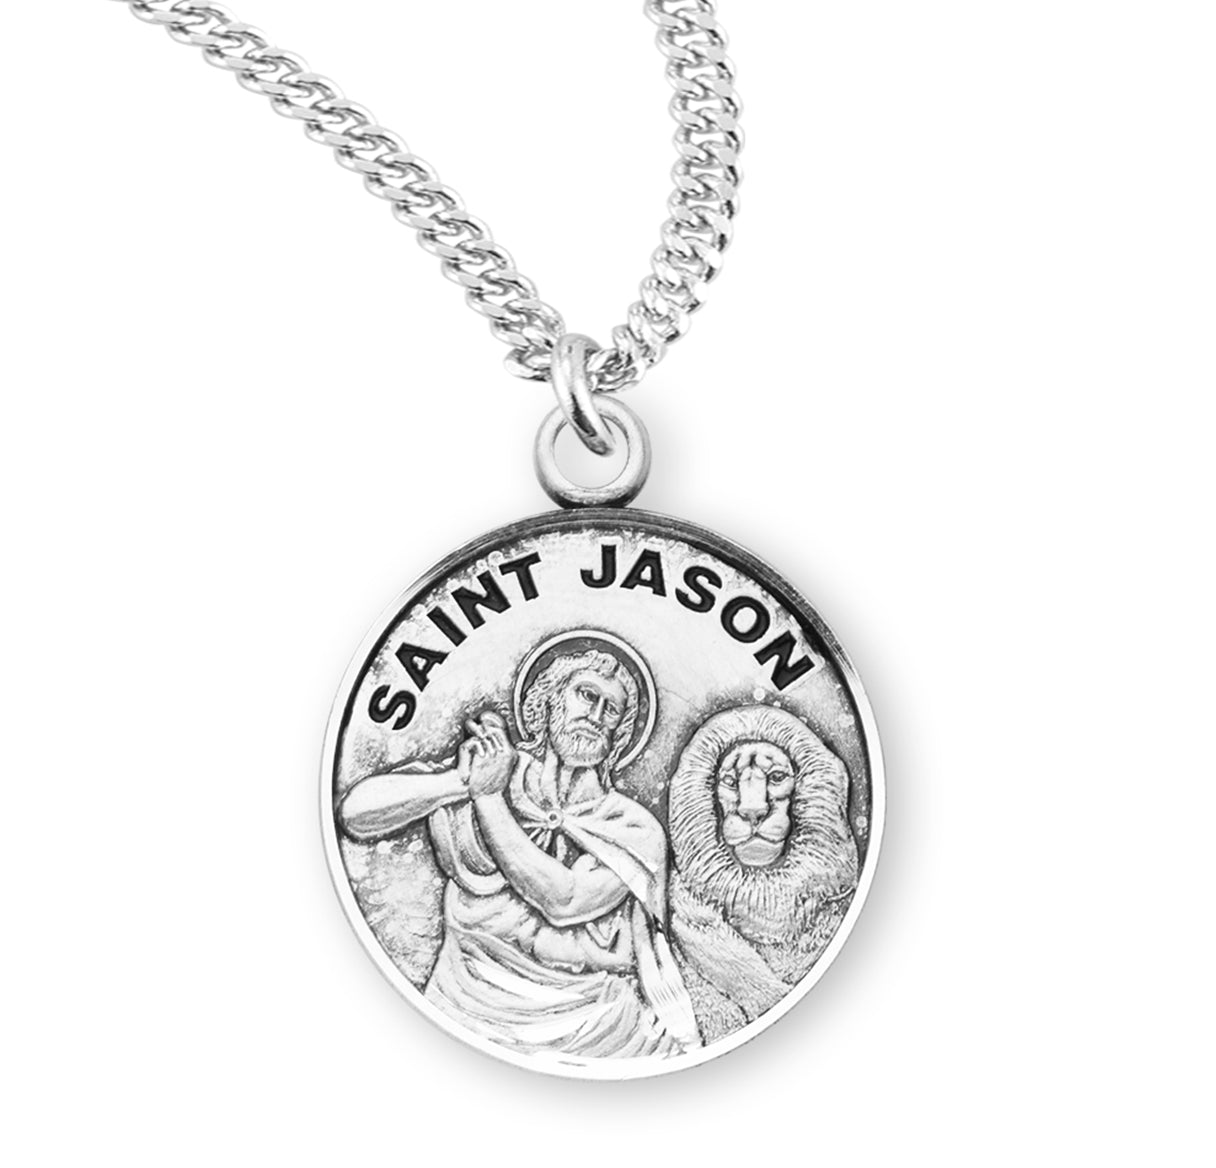 Patron Saint Jason Round Sterling Silver Medal